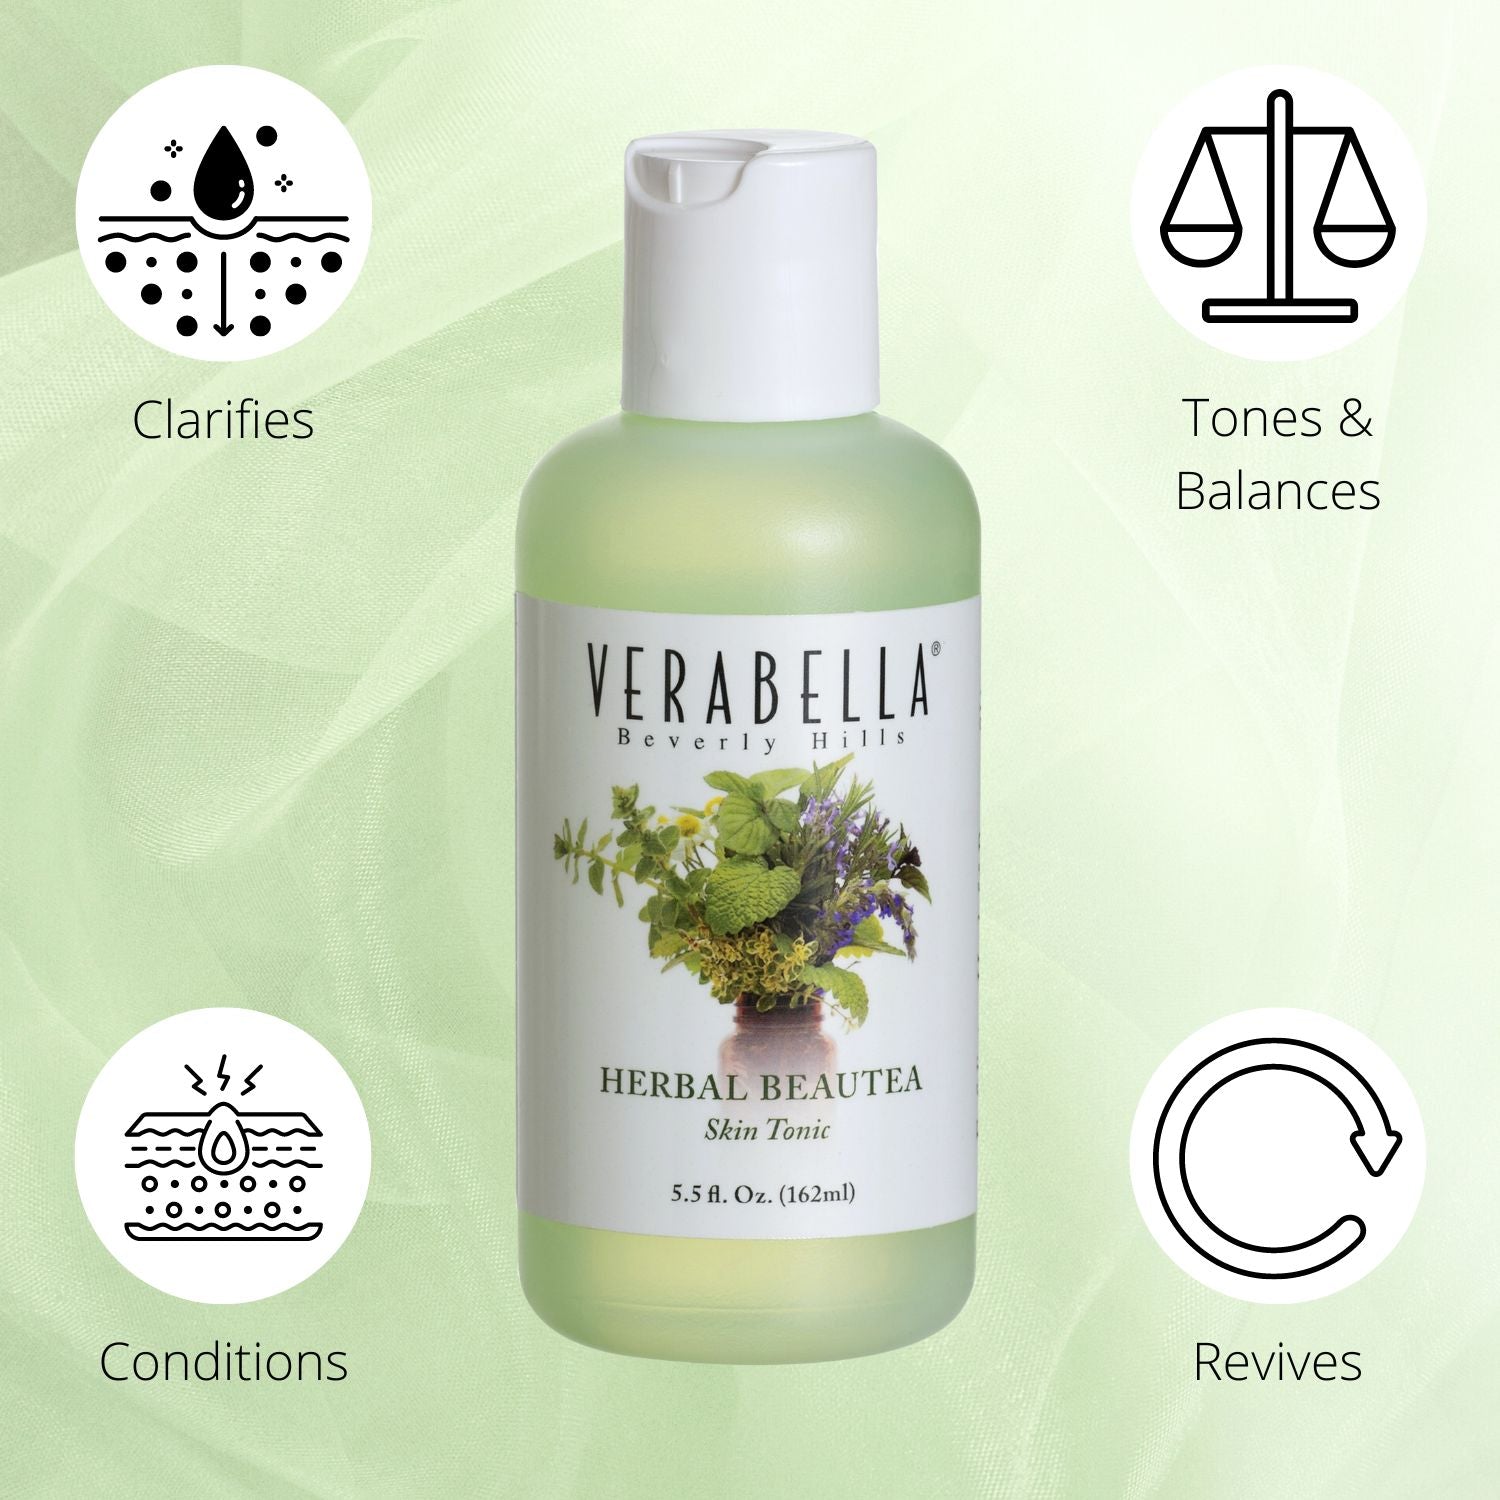 Verabella Herbal Beautea clarifies, tones, and balances